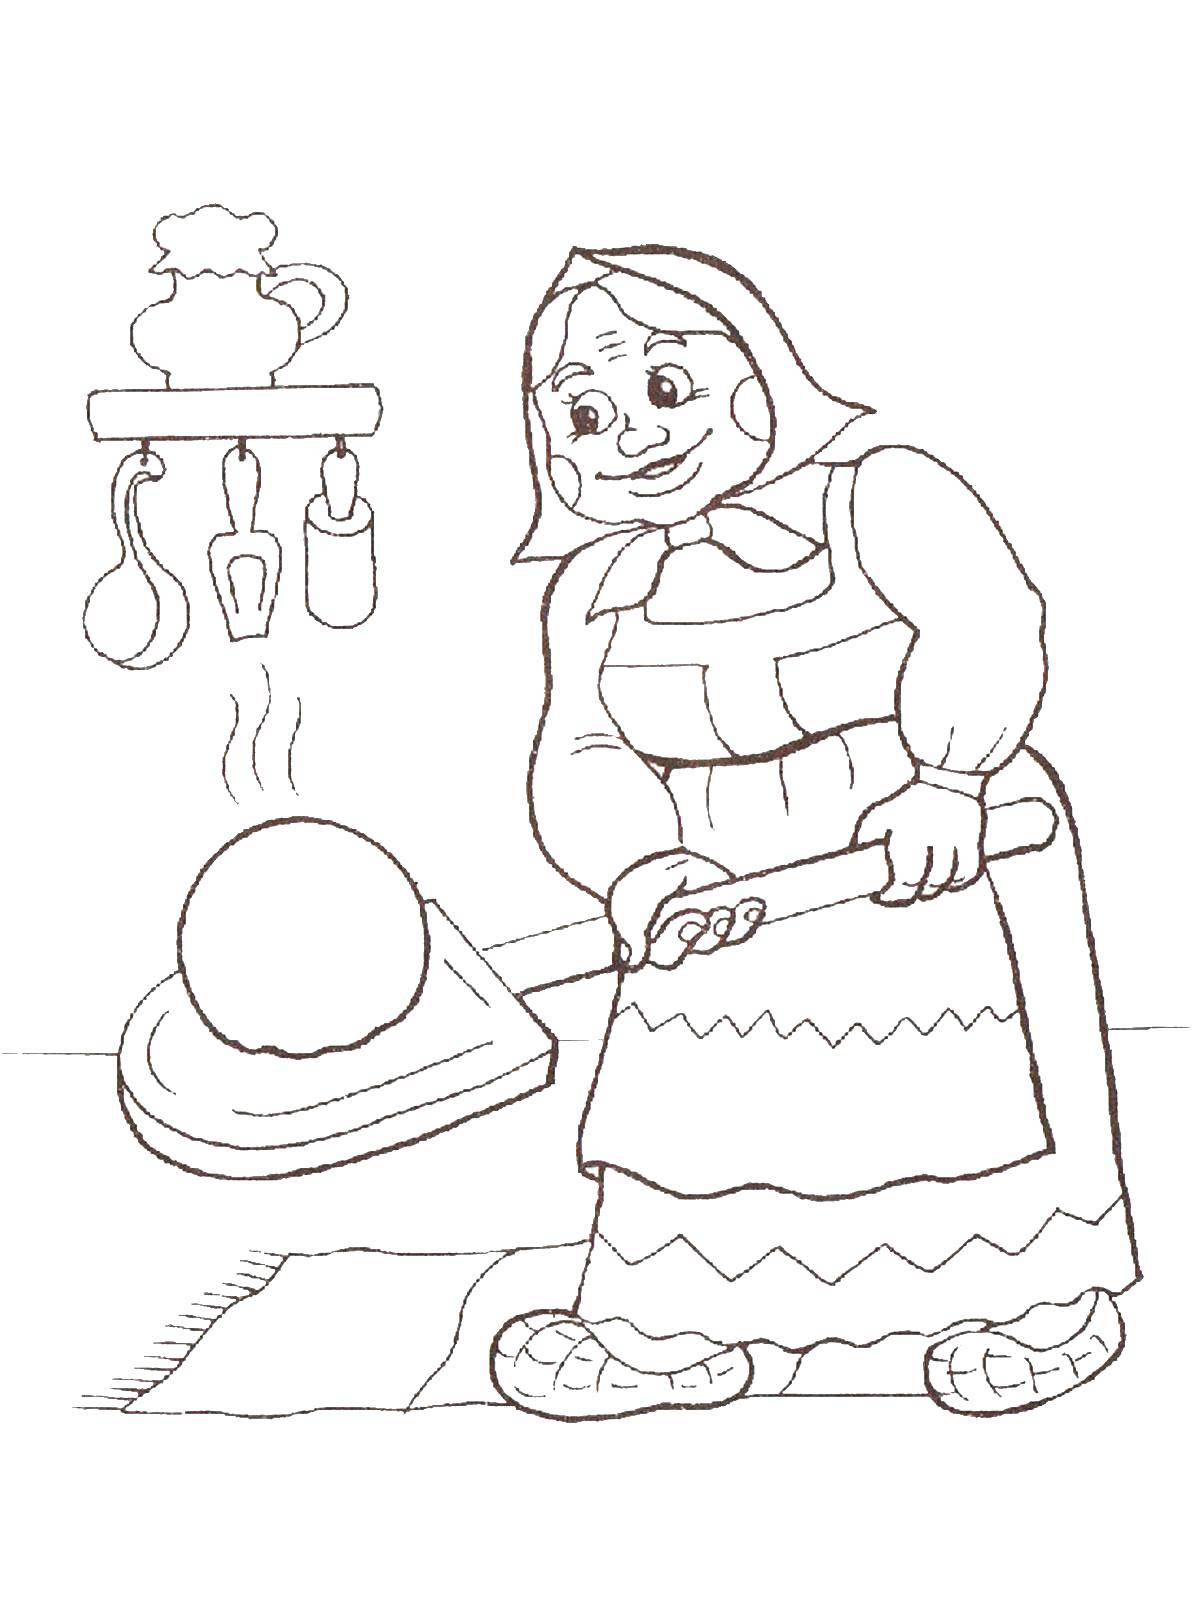 Coloring Grandma baked bun. Category Fairy tales. Tags:  Fairy Tales, Gingerbread Man.